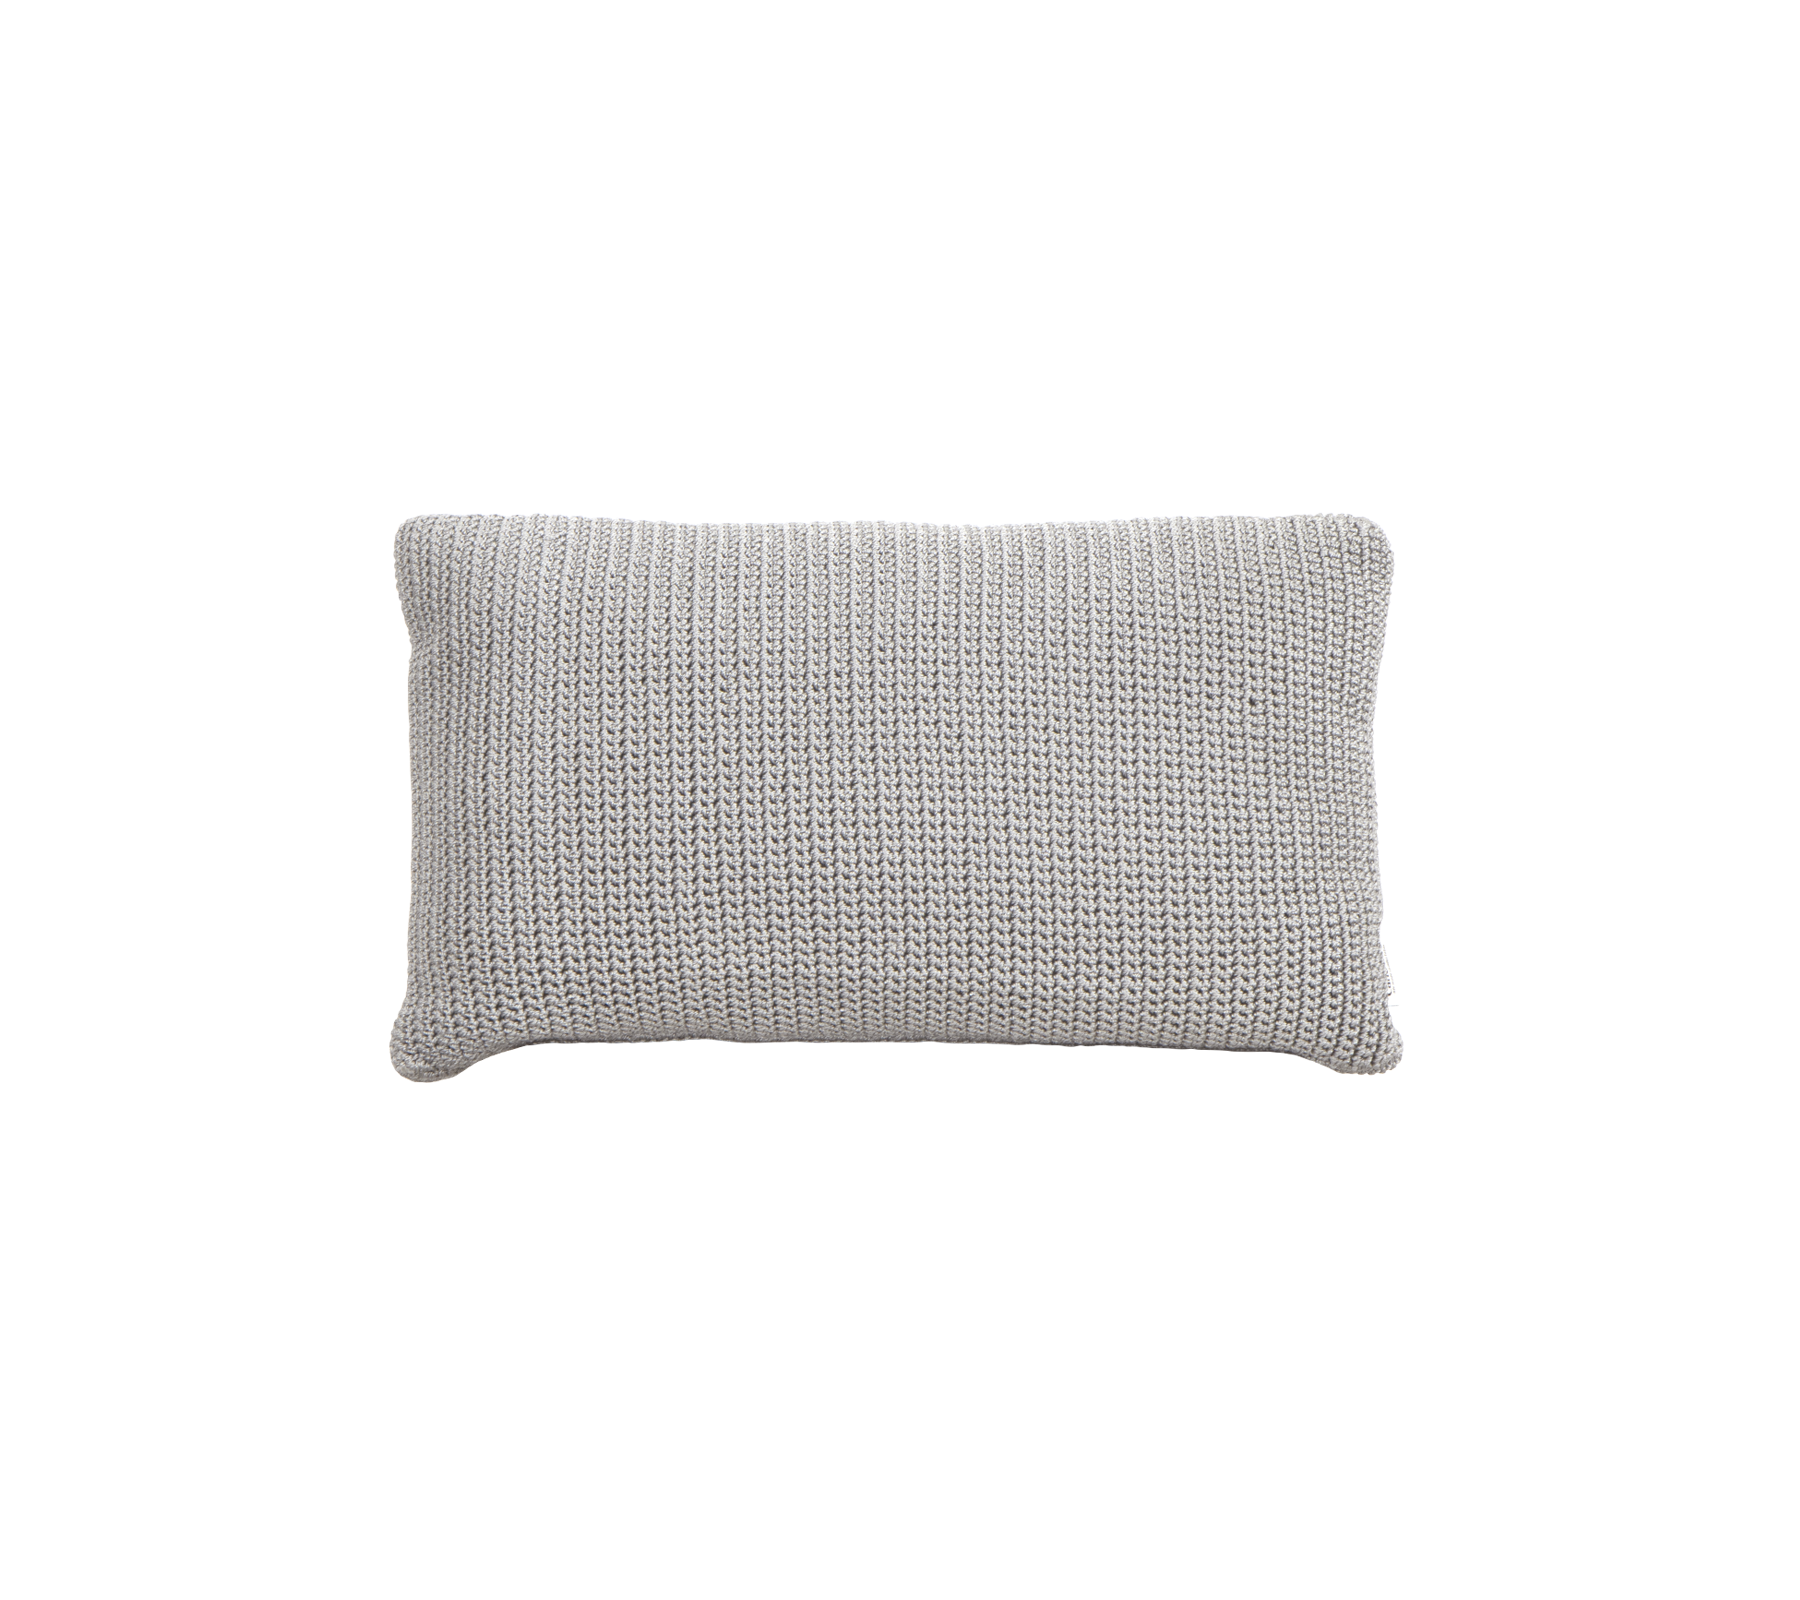 Divine scatter cushion, 32x52x12 cm